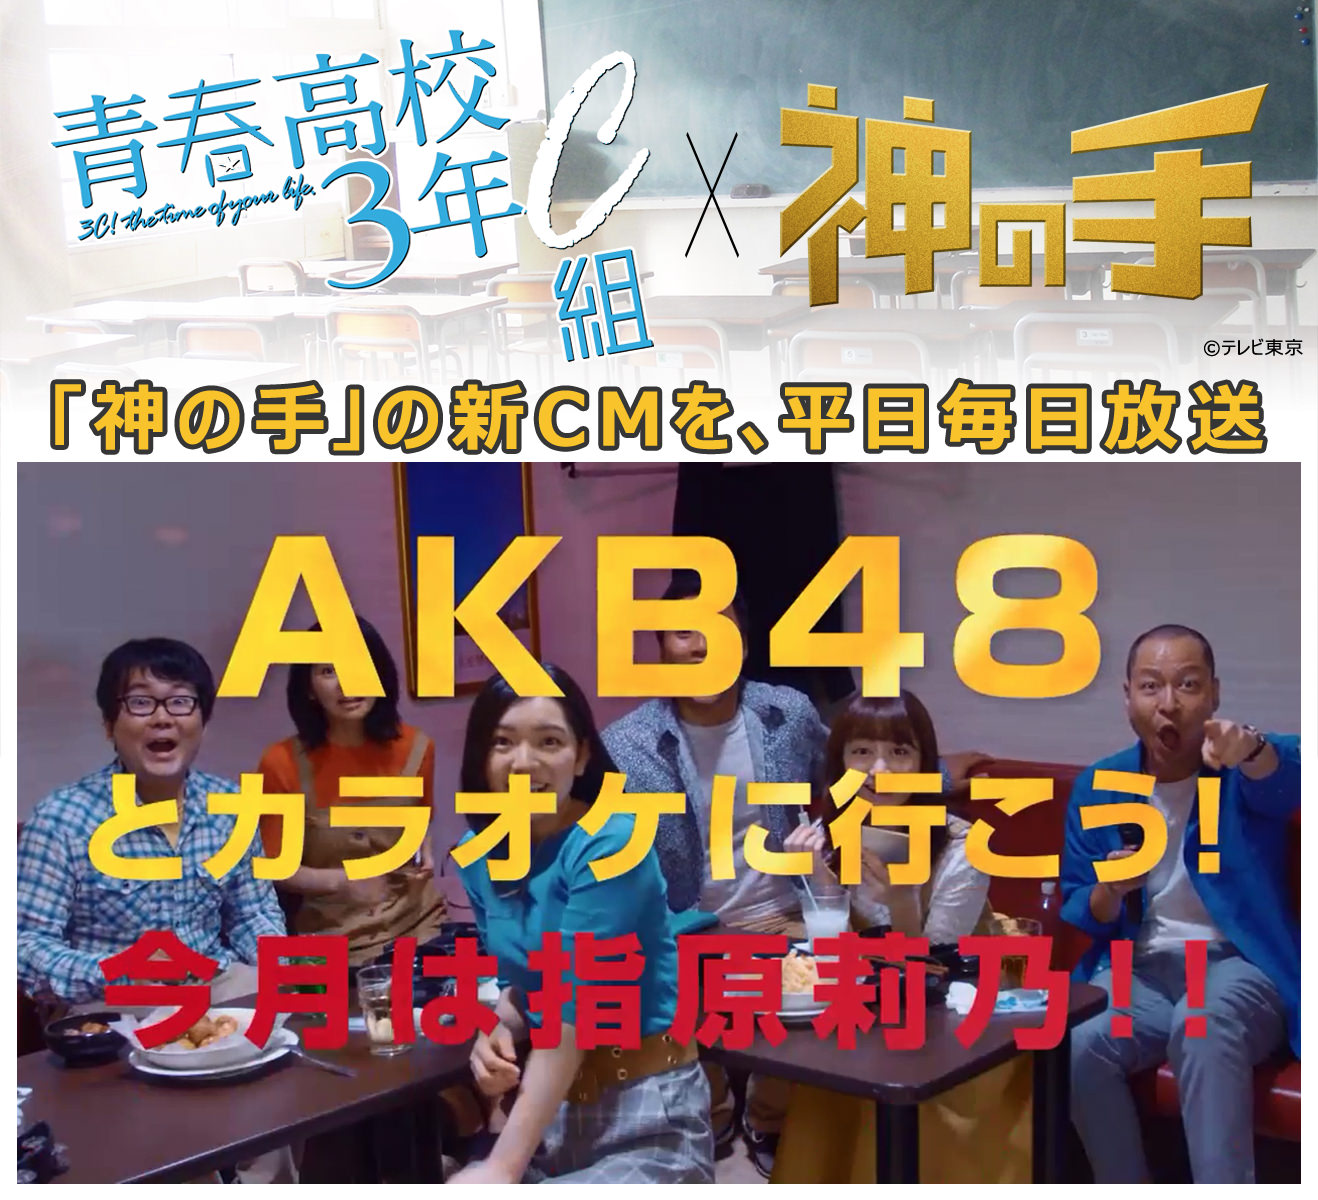 3Dスマホクレーンゲーム「神の手」テレビ東京「青春高校3年C組」への番組提供＆平日毎日新CM放送